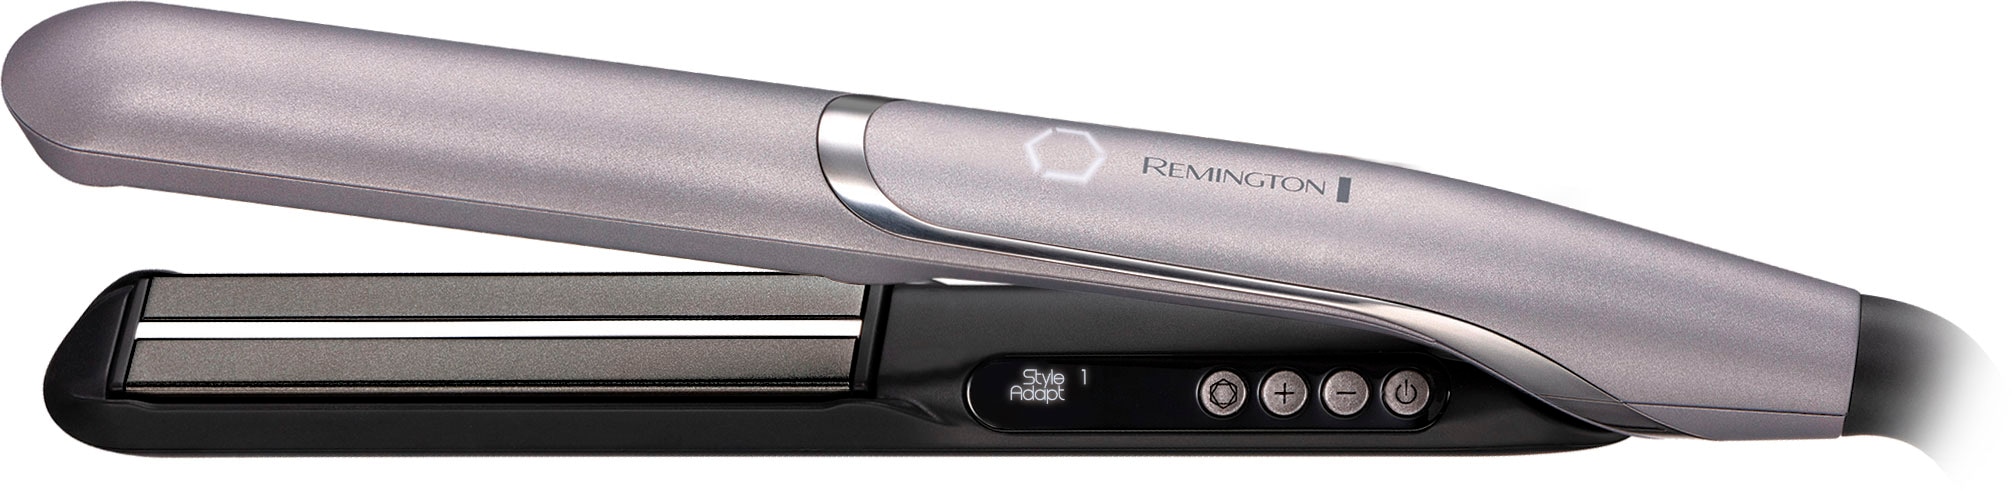 »PROluxe You™ Memory StyleAdapt™ Nutzerprofile 2 OTTO Remington Haarglätter, bei Glätteisen Funktion, jetzt kaufen S9880«, lernfähiger Keramik-Beschichtung,